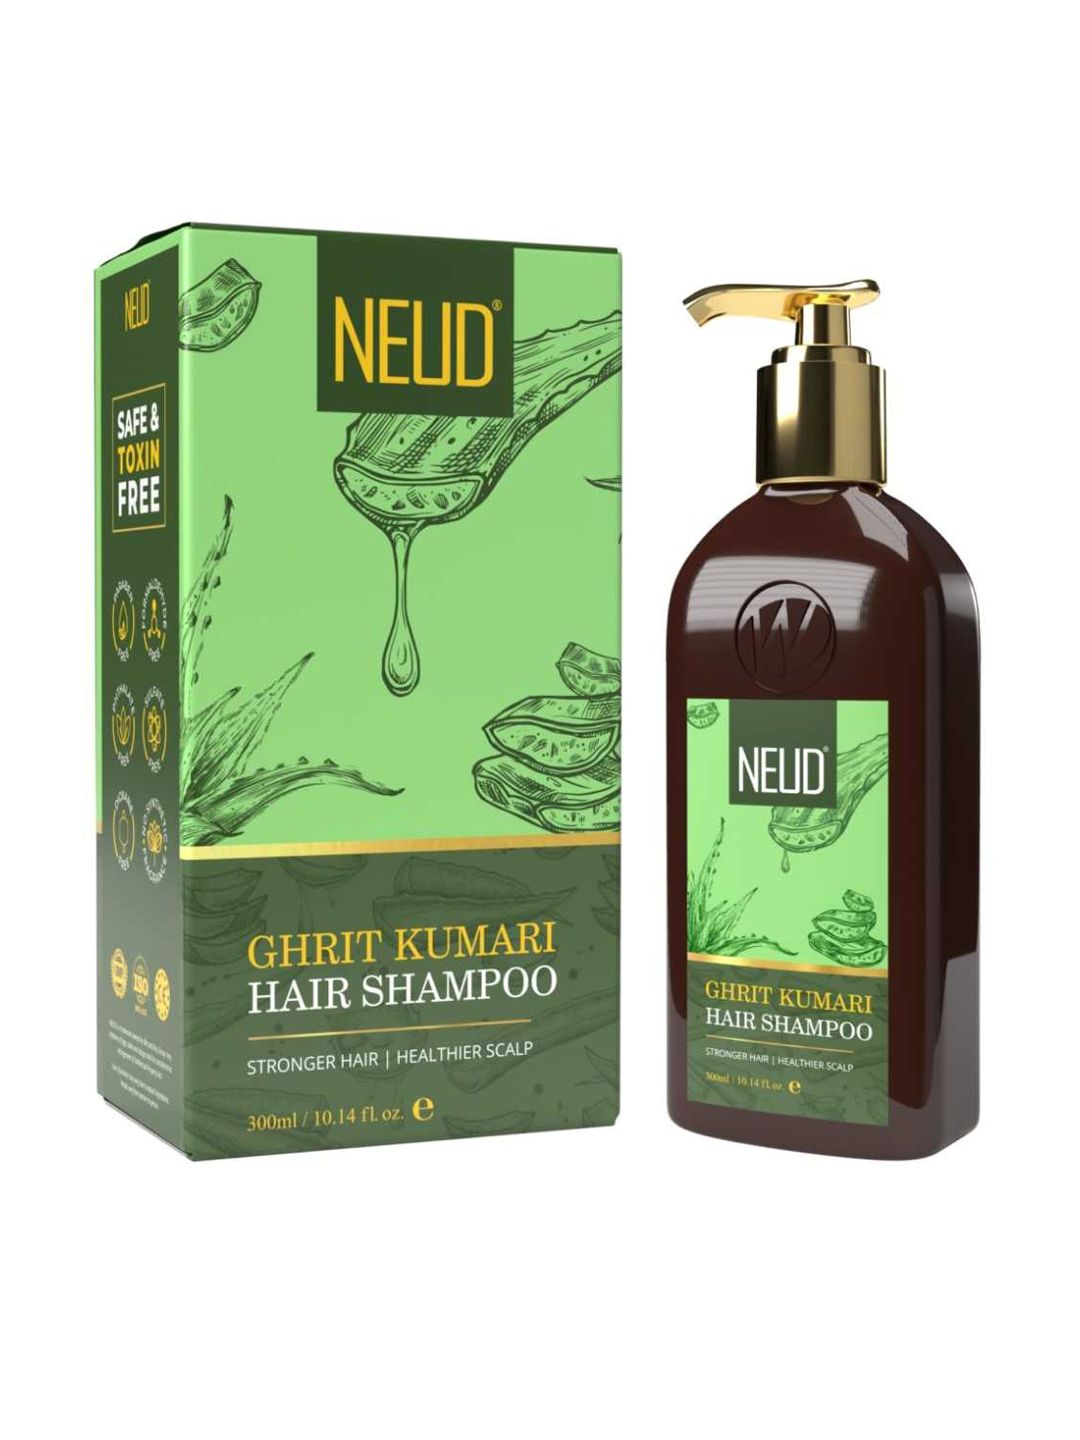 NEUD Ghrit Kumari Hair Shampoo - 300 ml Price in India